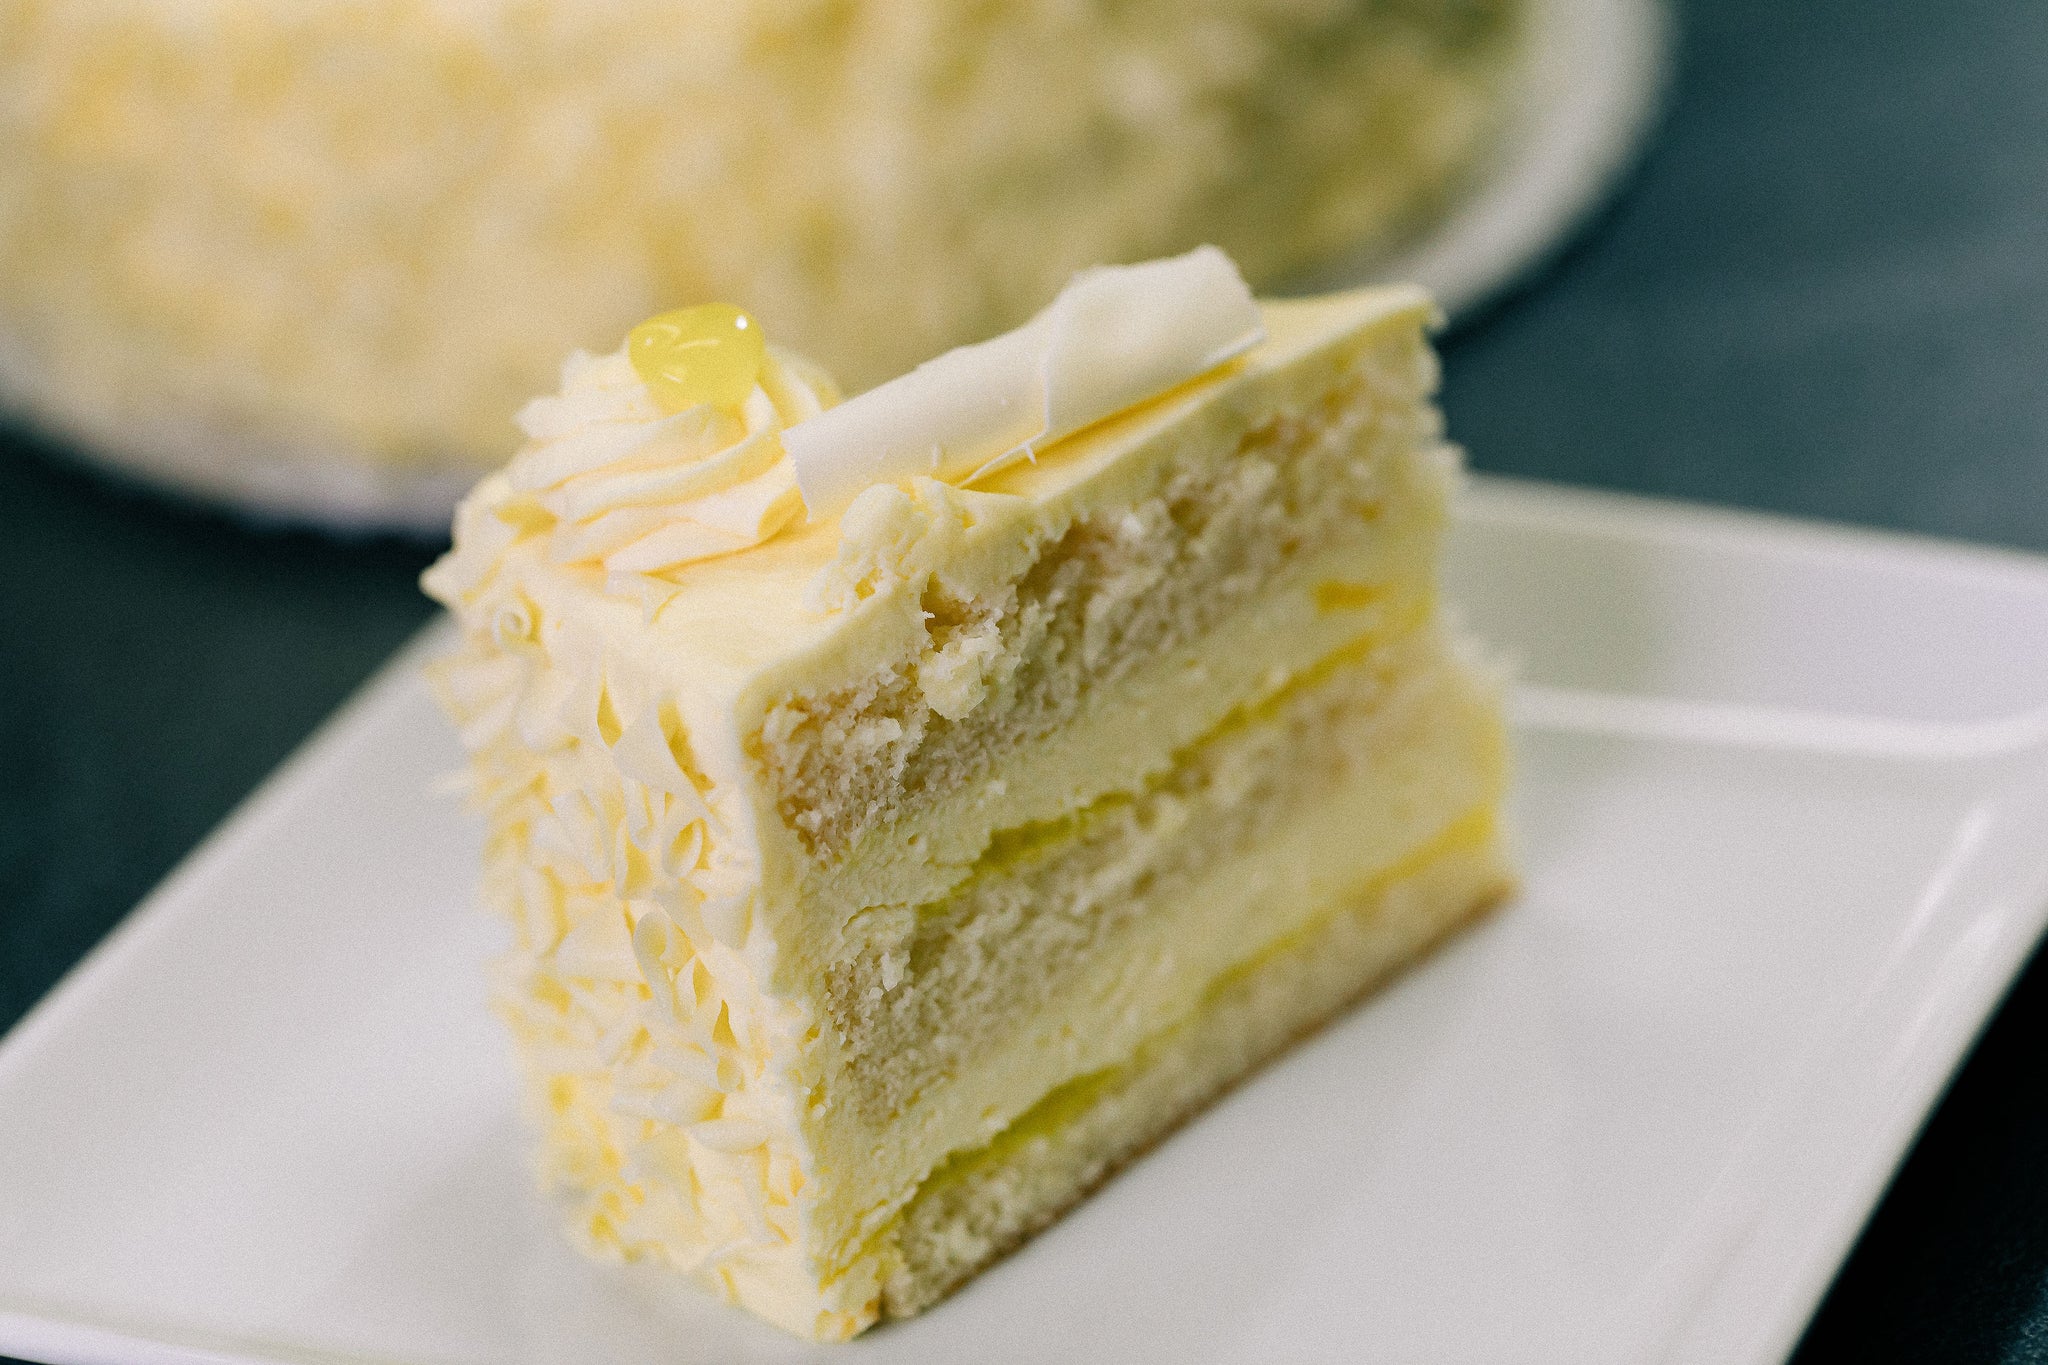 Lemon Ricotta Cake Recipe: How to Make It